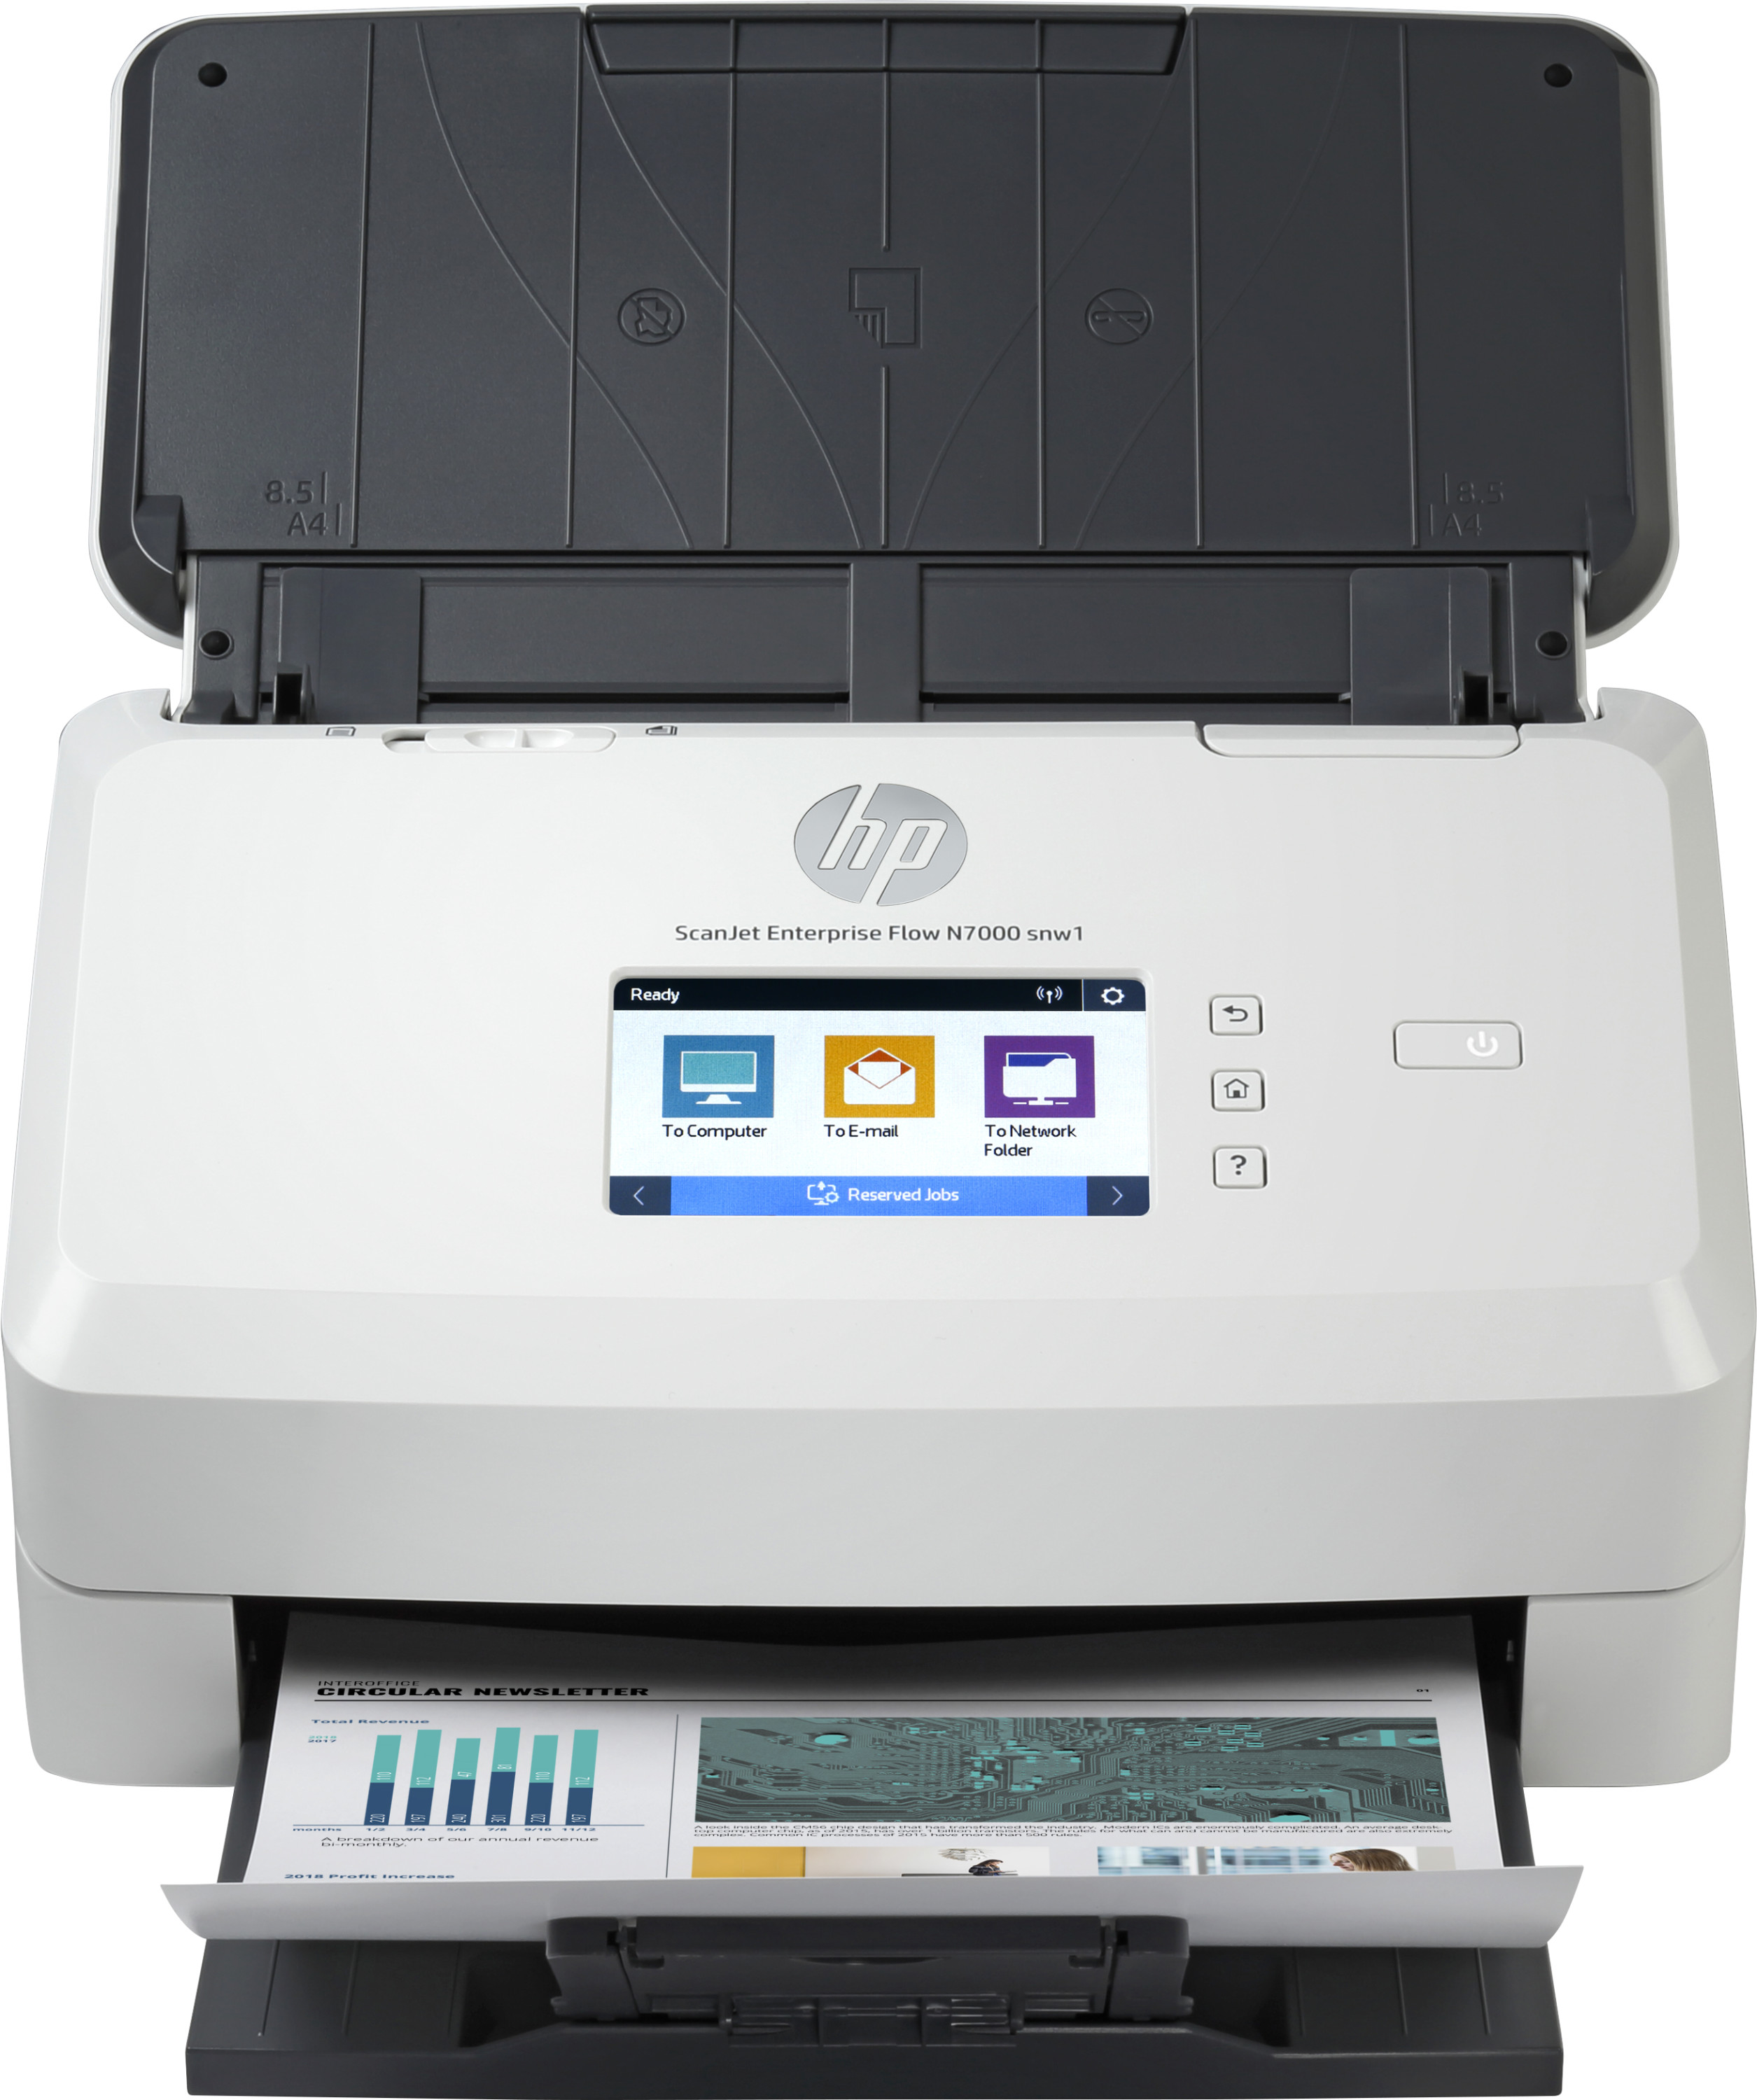 HP ScanJet Enterprise Flow N7000 snw1 Scanner, New, 6FW10A#BGJ, White - image 1 of 2